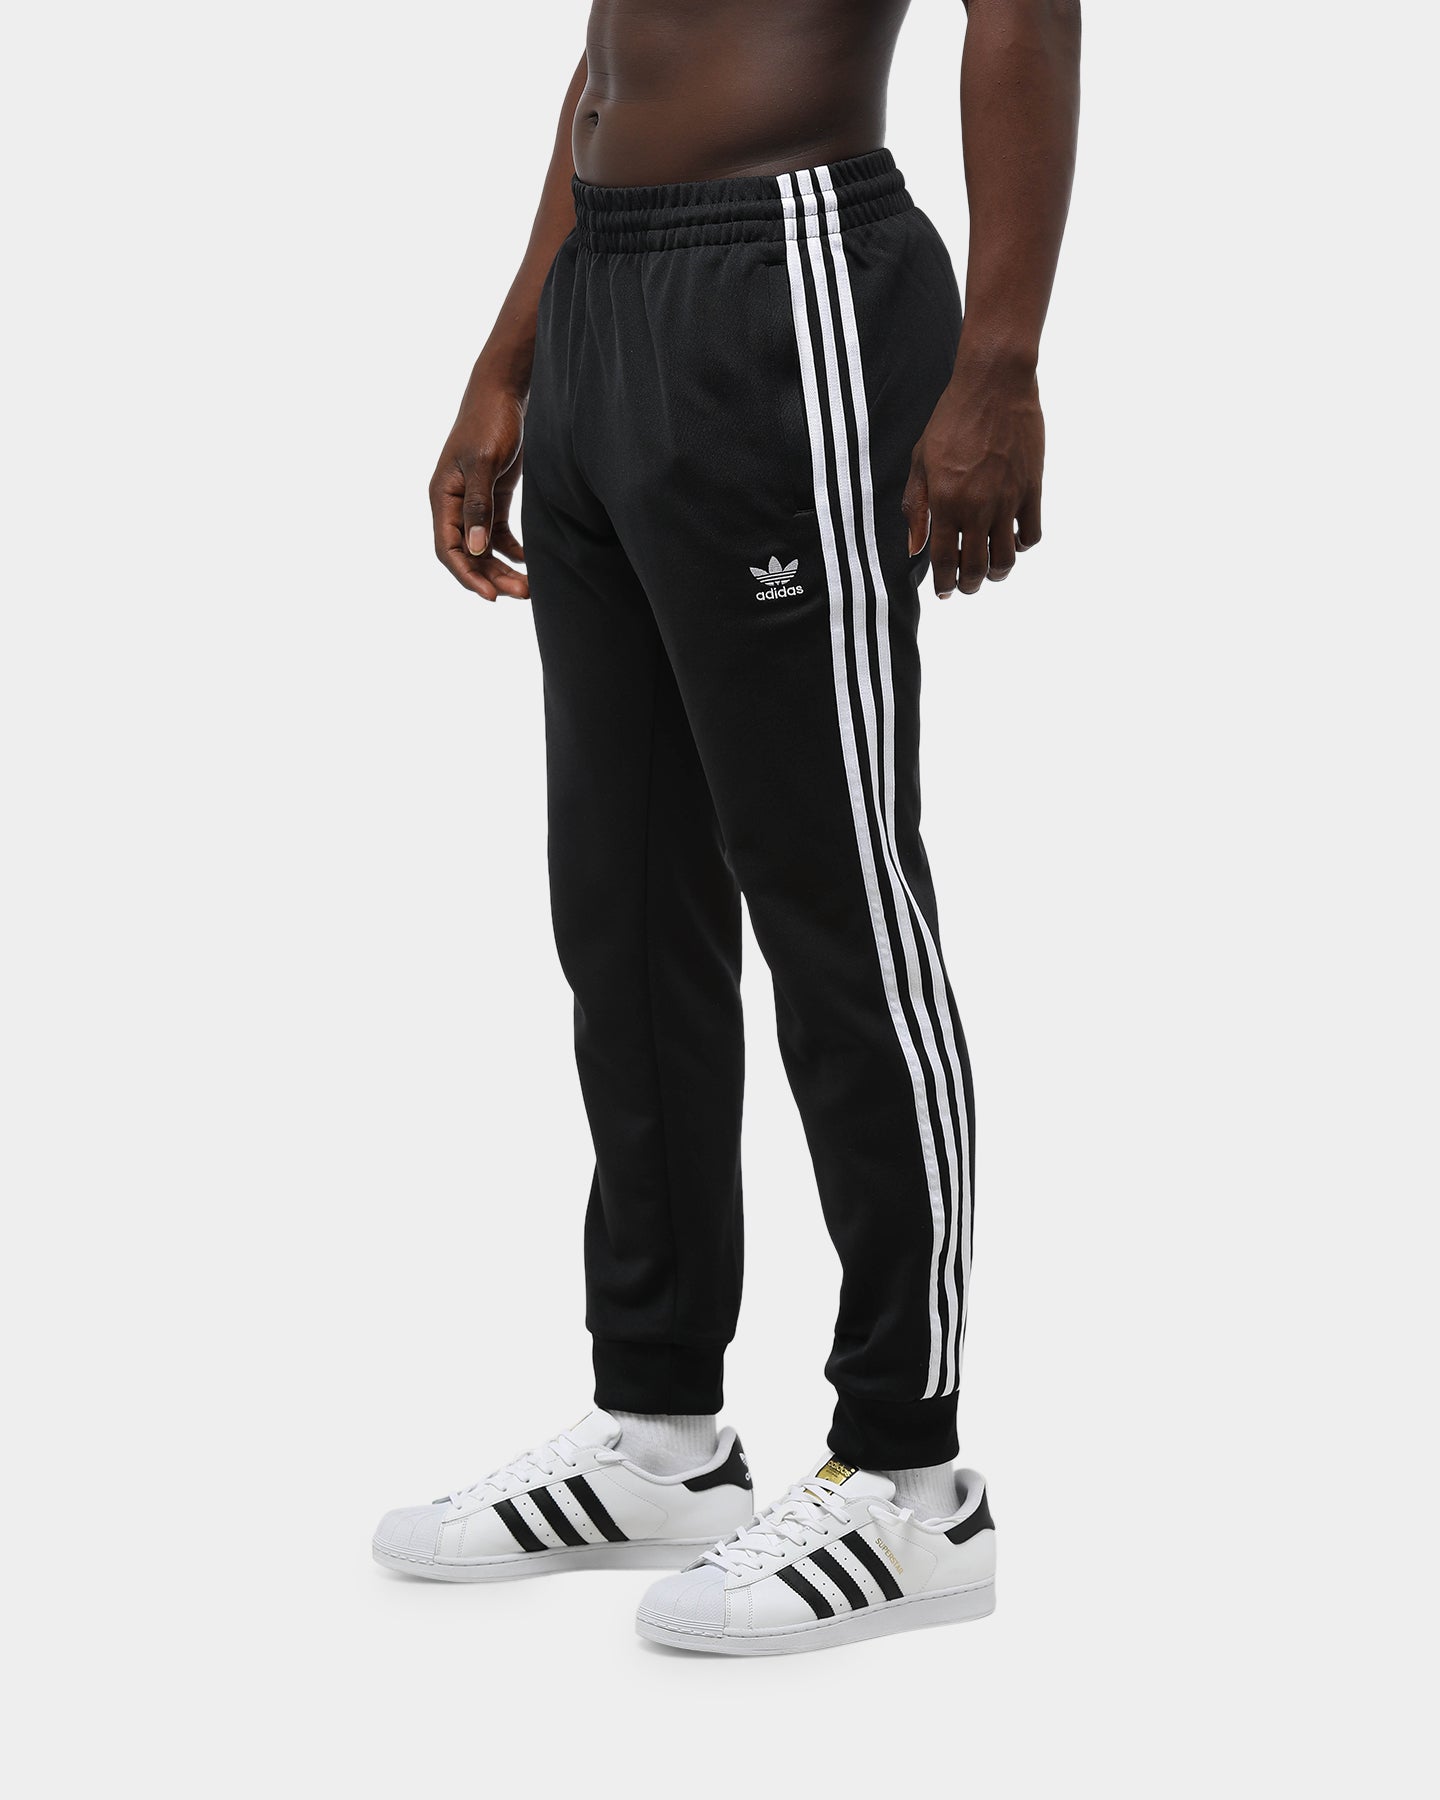 Adidas Originals SST Track Pant Black 